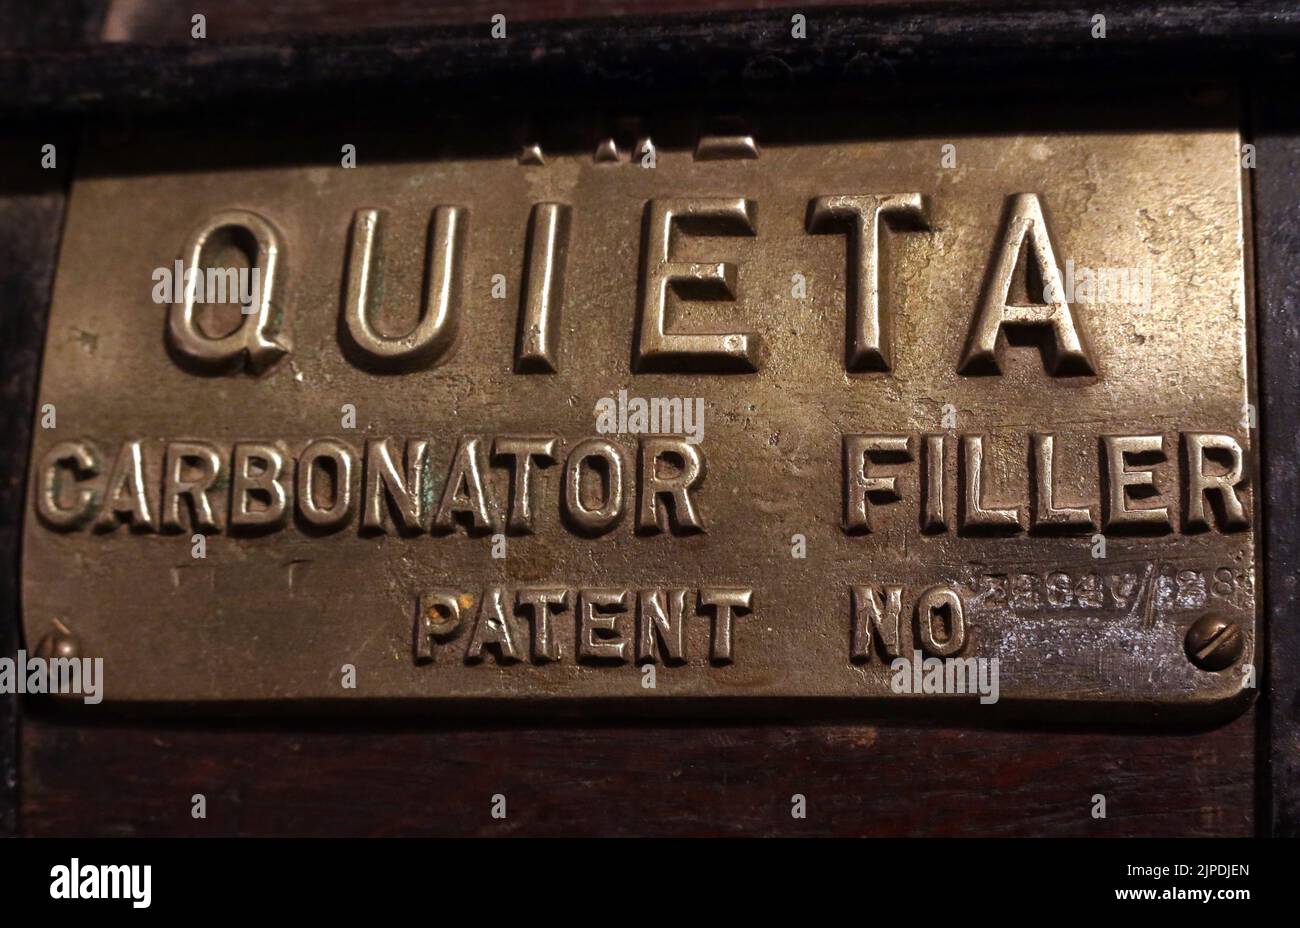 Manufacturers plate, Quieta patent bottle carbonator, Filler machine for cider, cider maker, Hereford, England, UK Stock Photo